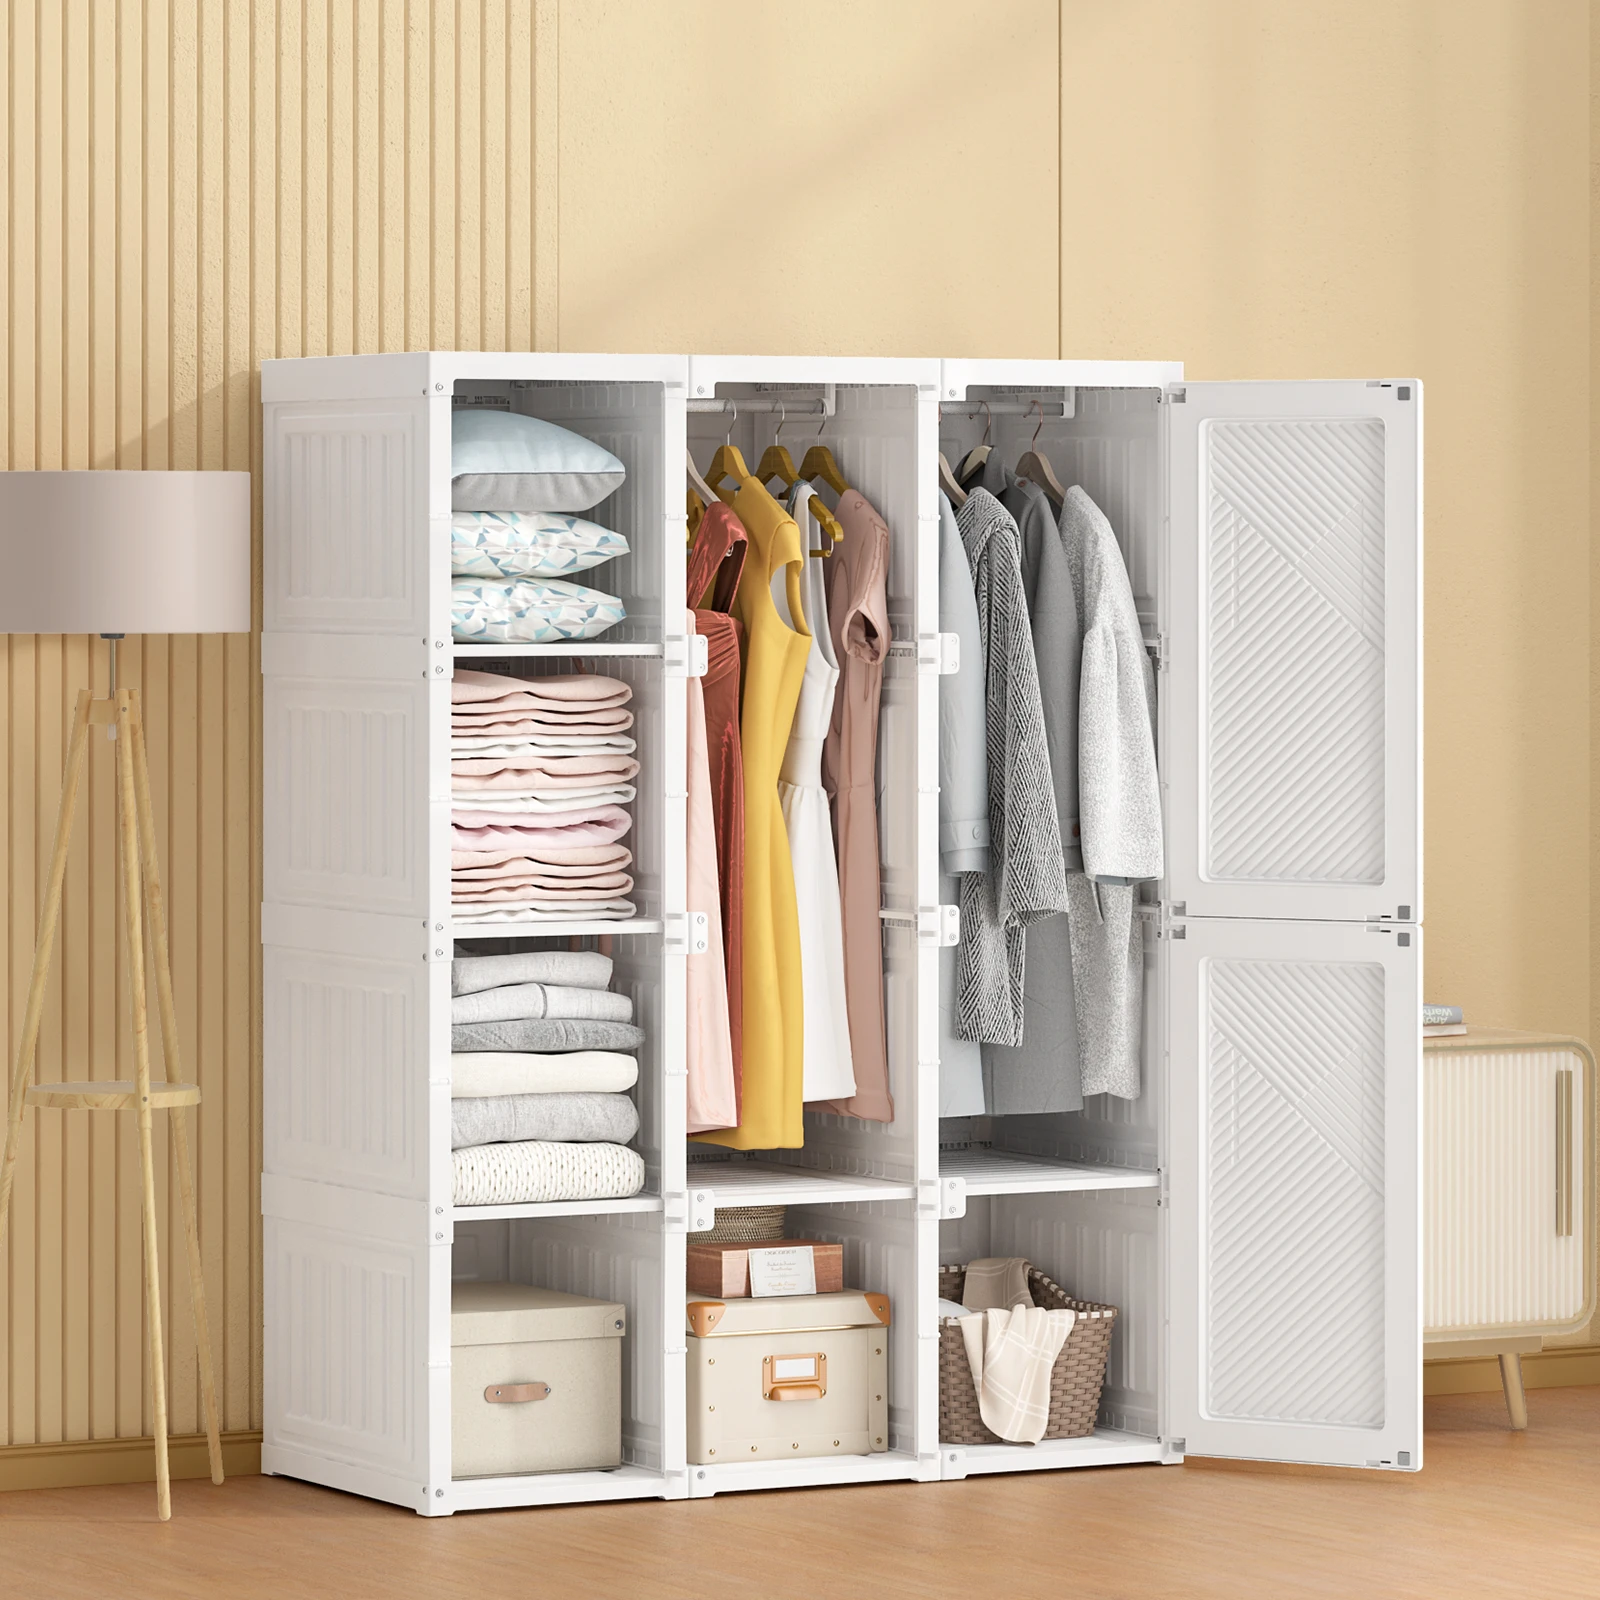 
Wholesale High Quality Large Storage Furniture Foldable Cabinet Plastic Portable Wardrobes 